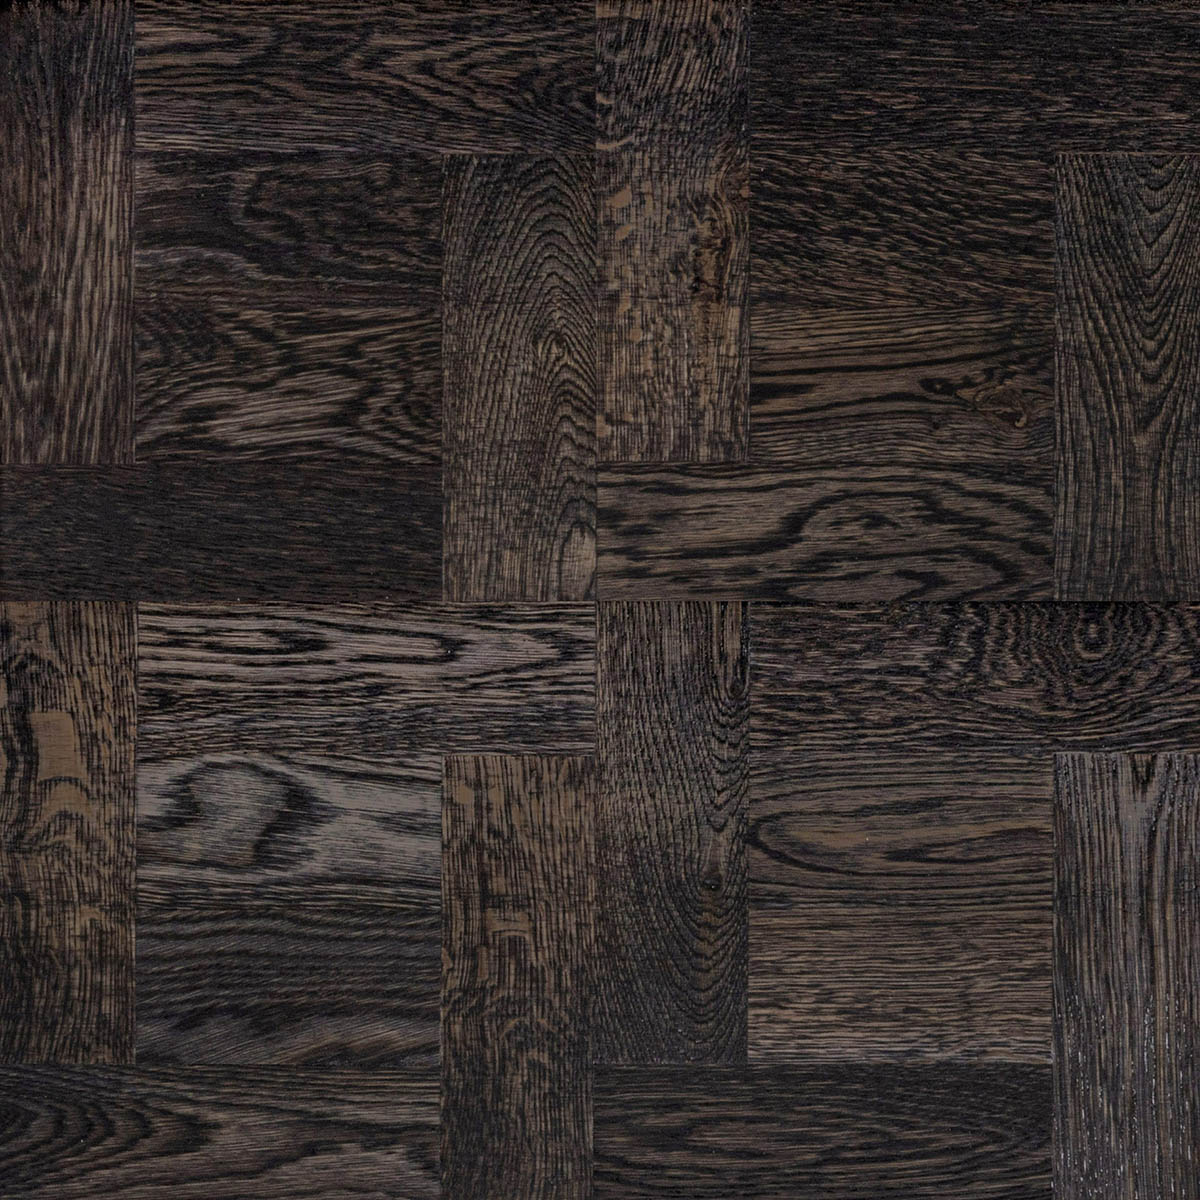 Bespoke geometric wood flooring